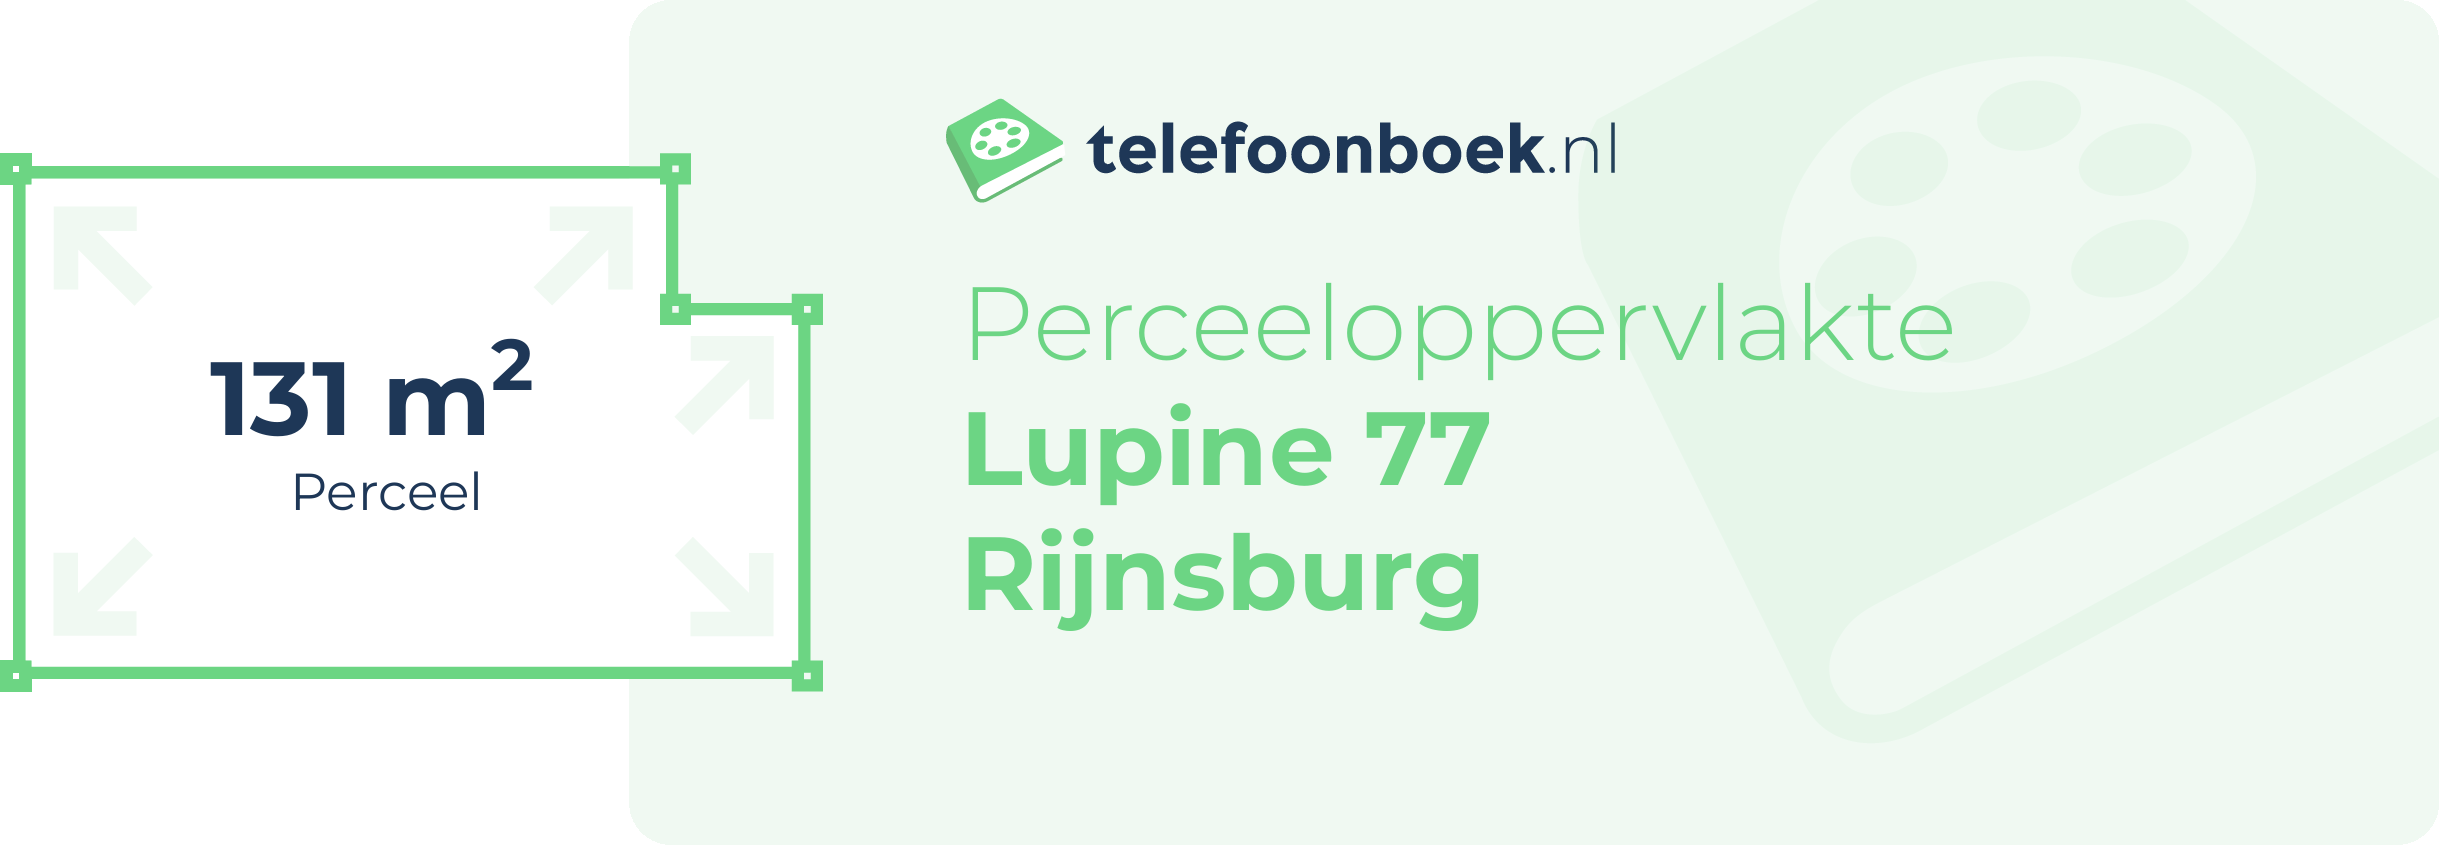 Perceeloppervlakte Lupine 77 Rijnsburg